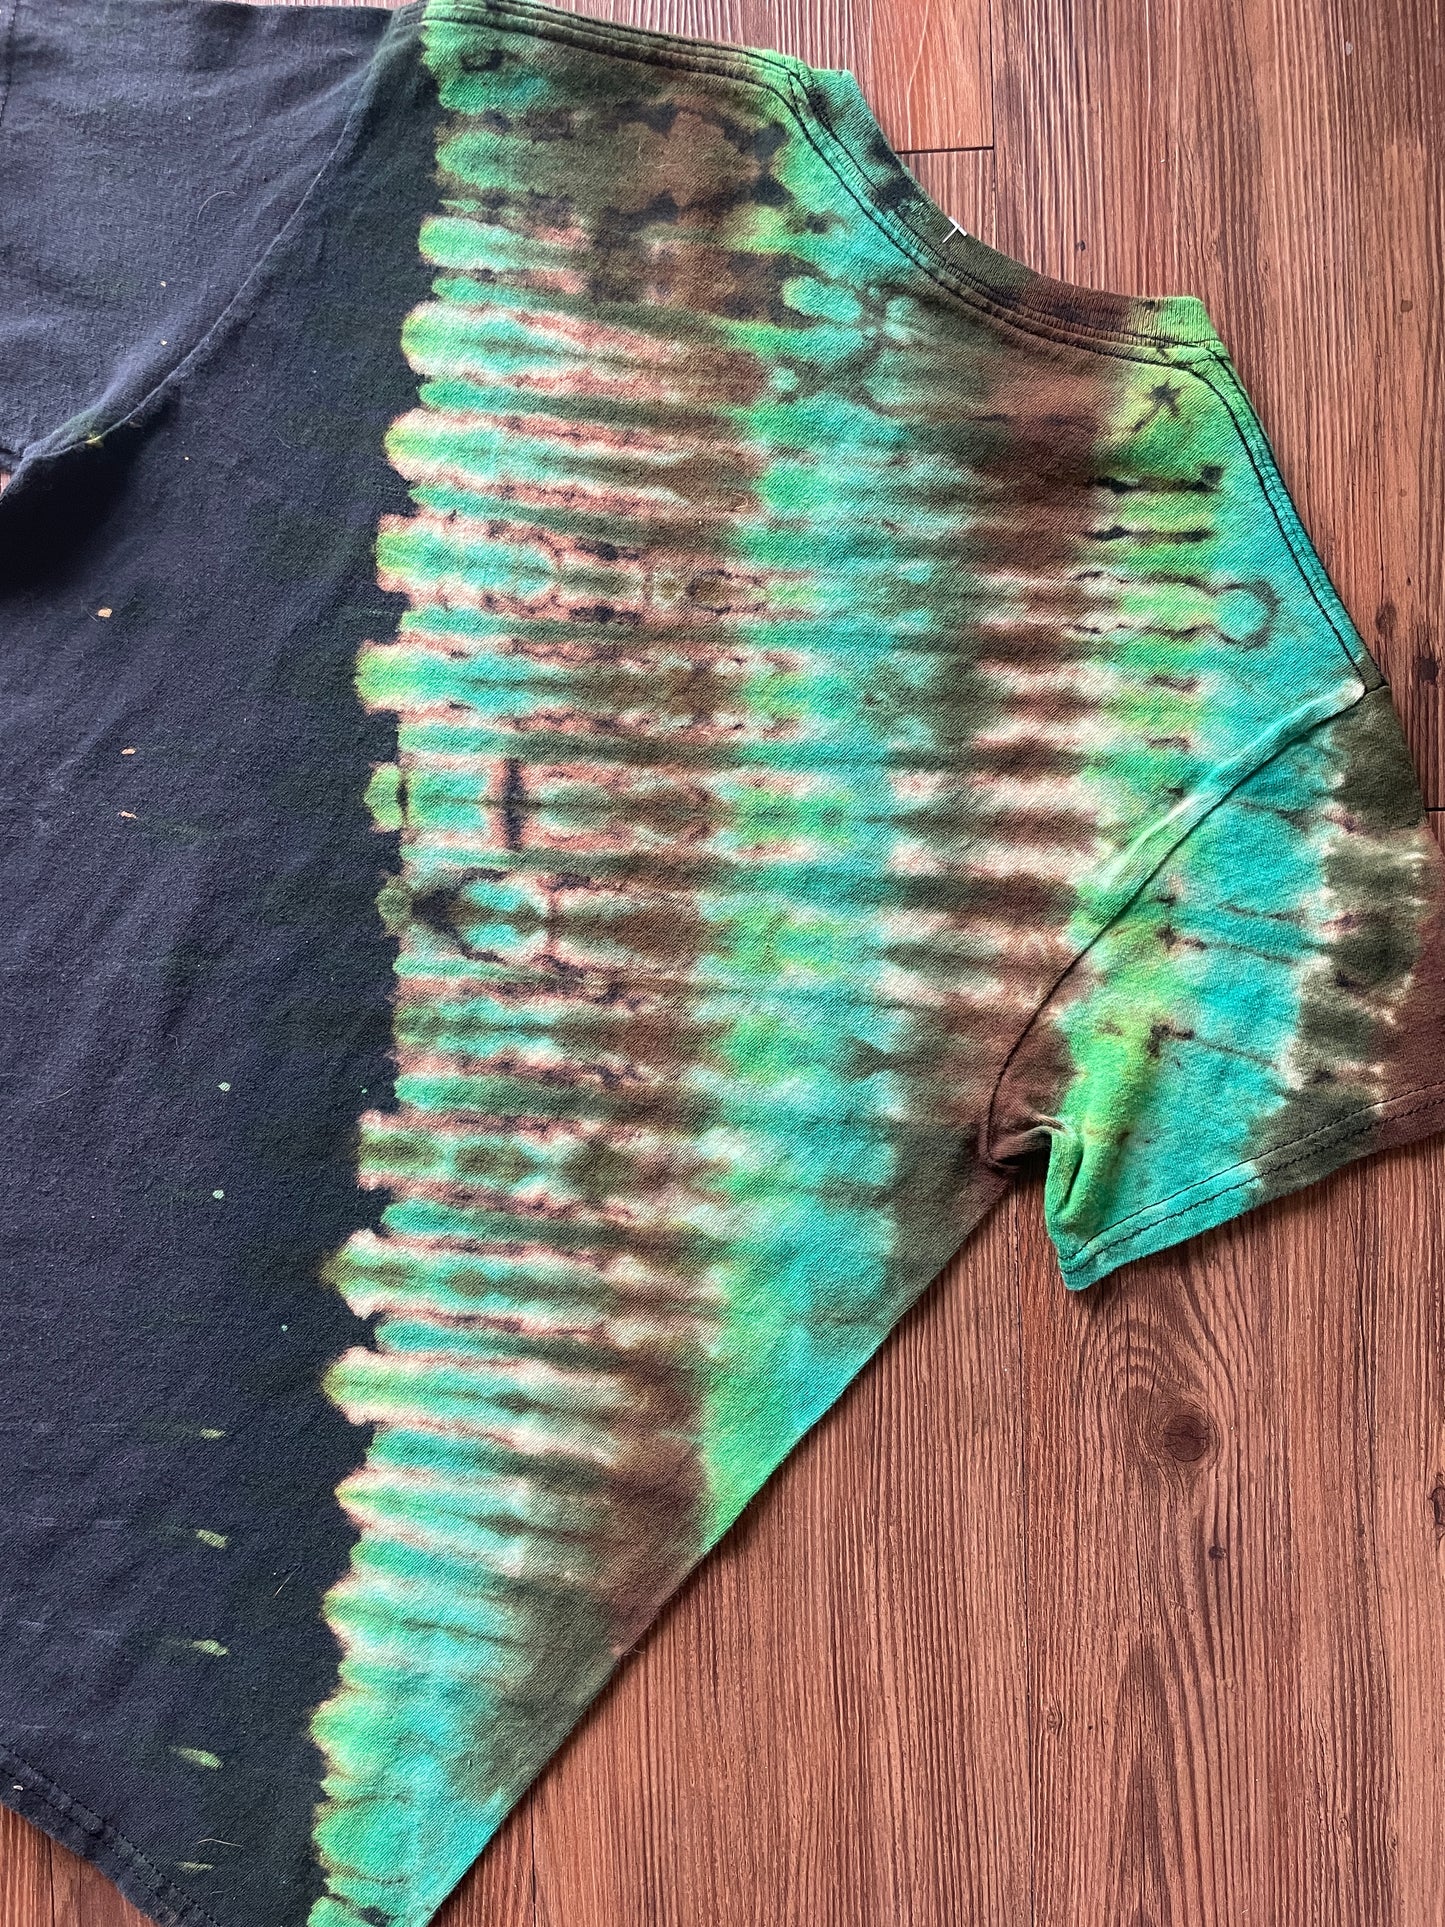 Small Men's Straight Outta Colorado Reverse Handmade Tie Dye T-Shirt | Black and Green Bleach Dye Tie Dye Short Sleeve